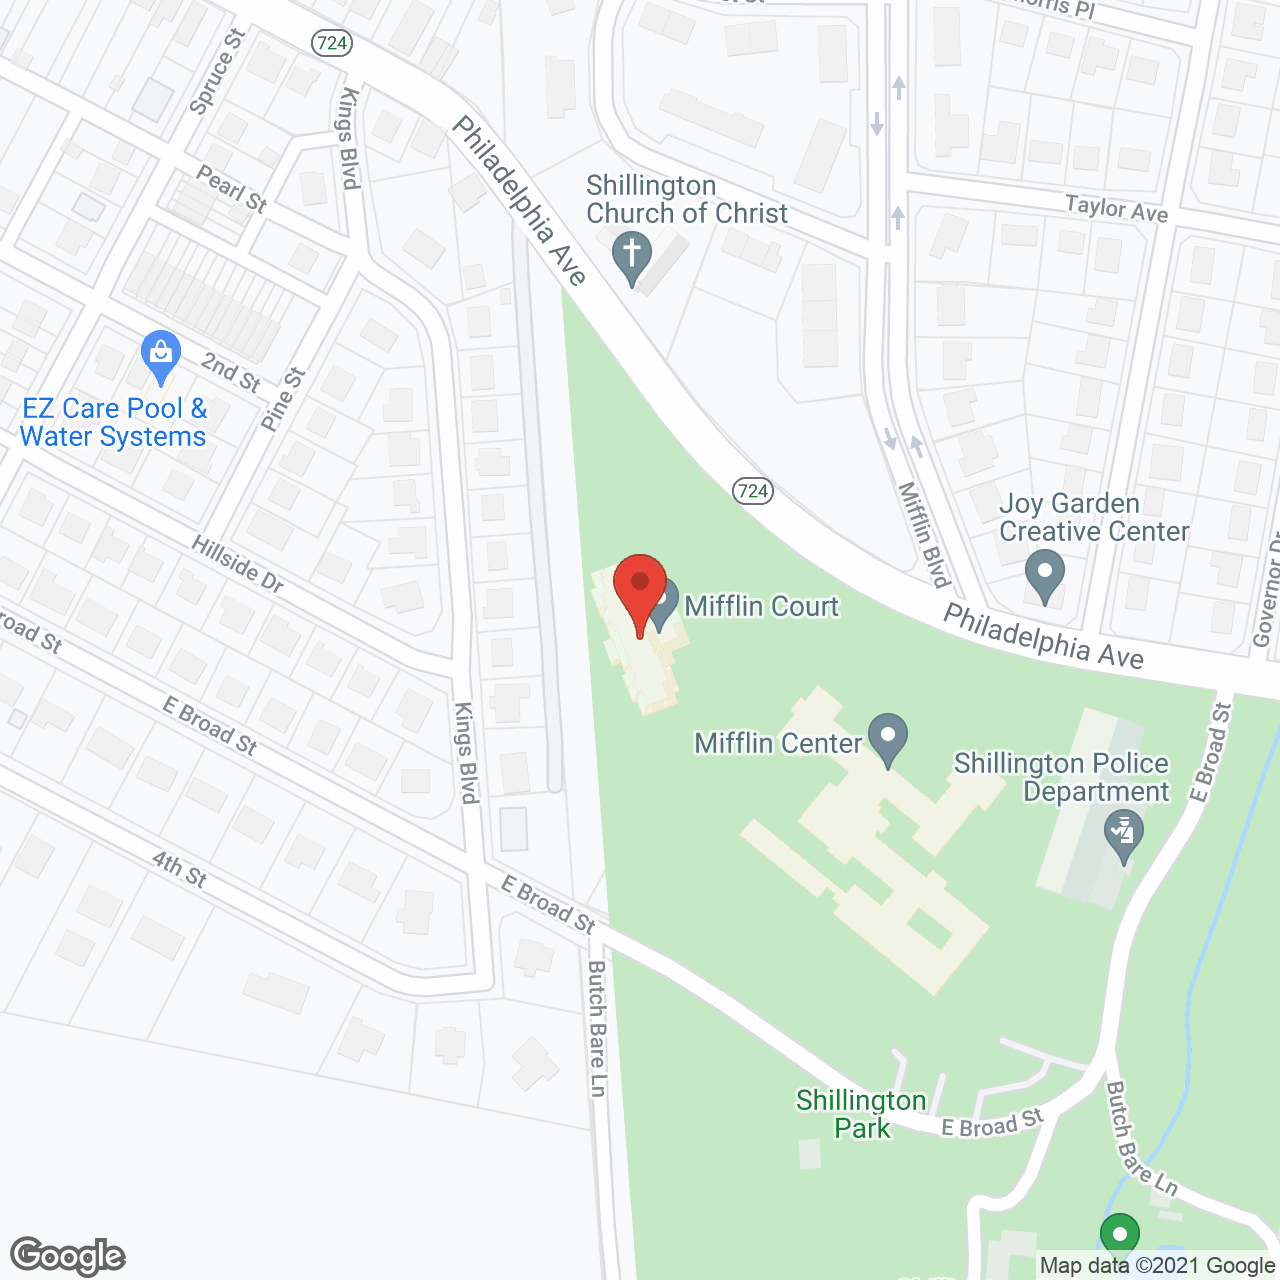 Mifflin Court in google map